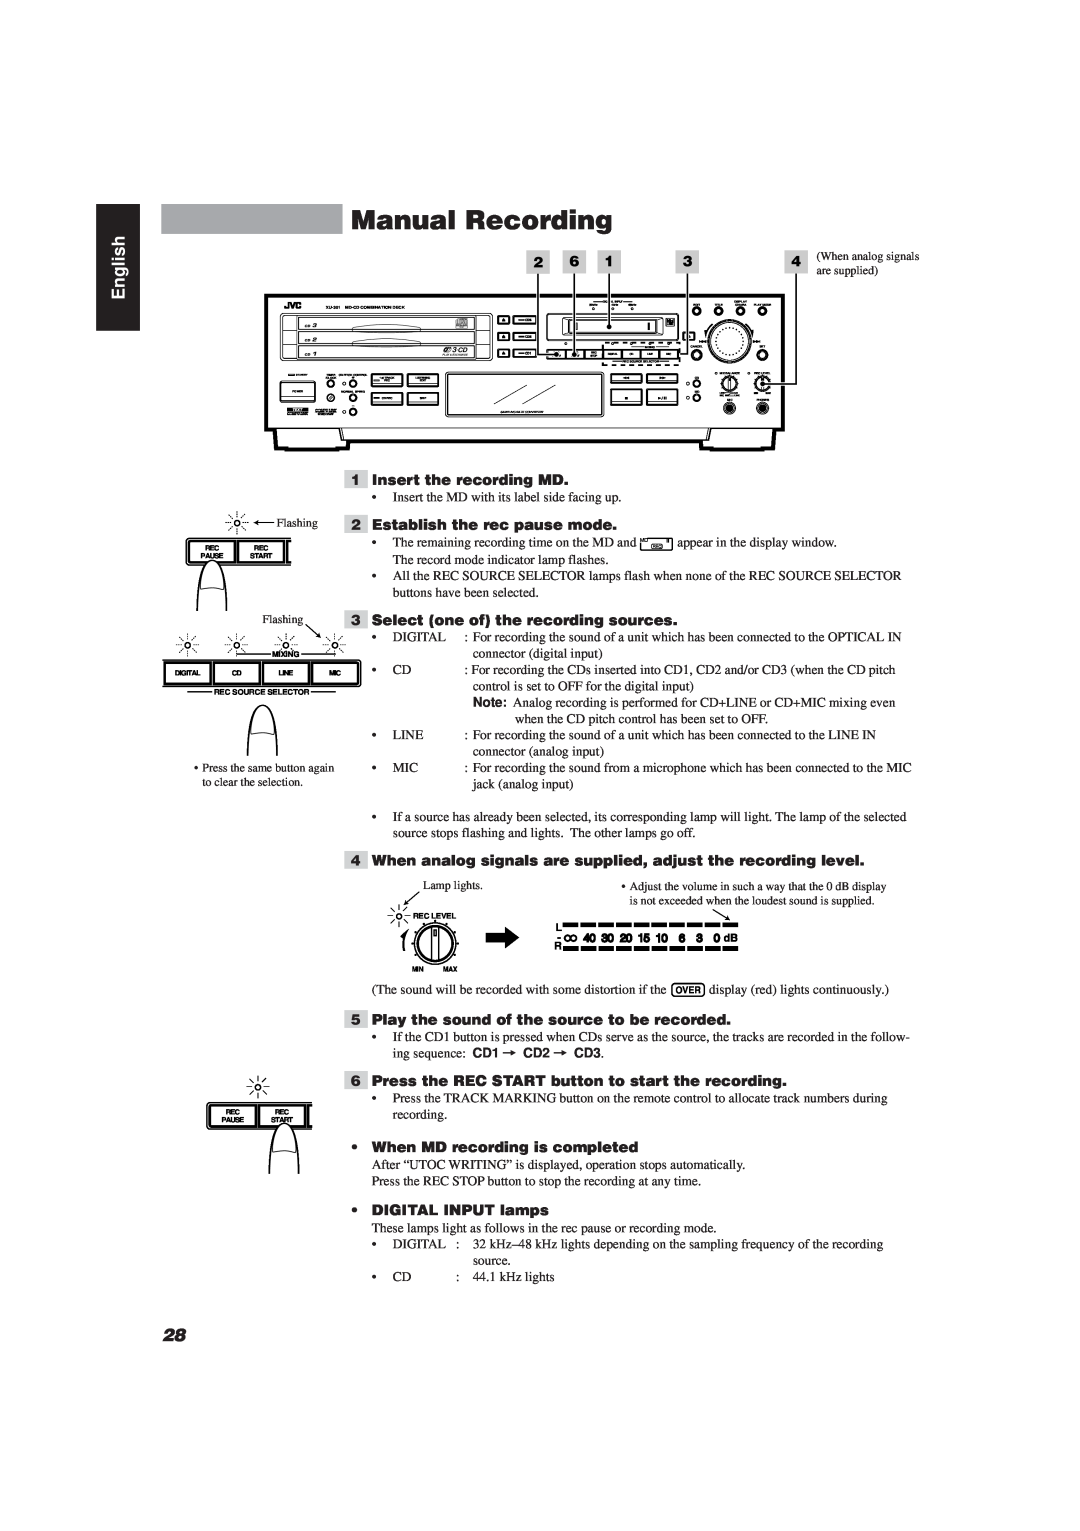 JVC XU-301BK manual Manual Recording, English 